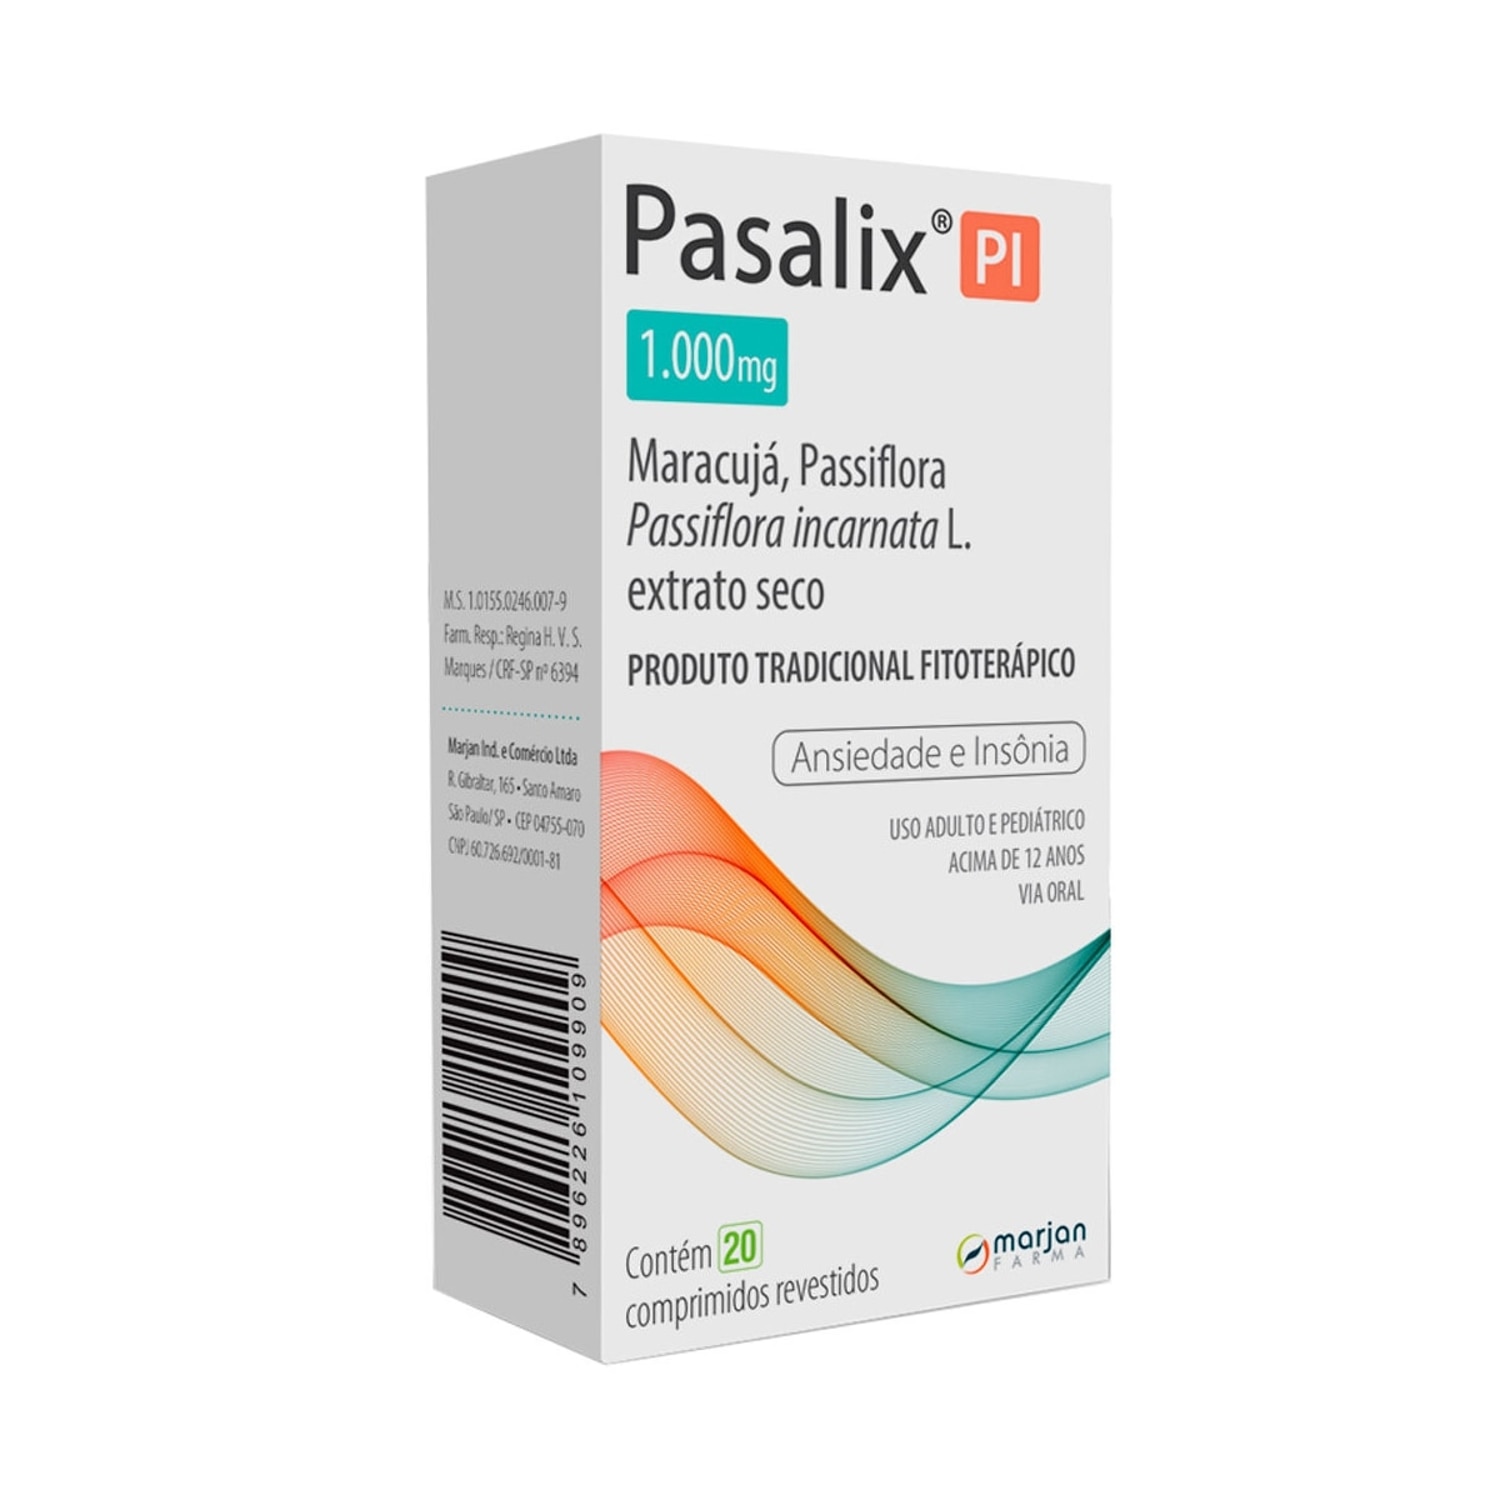 Pasalix PI 1000mg 20 Comprimidos Revestidos